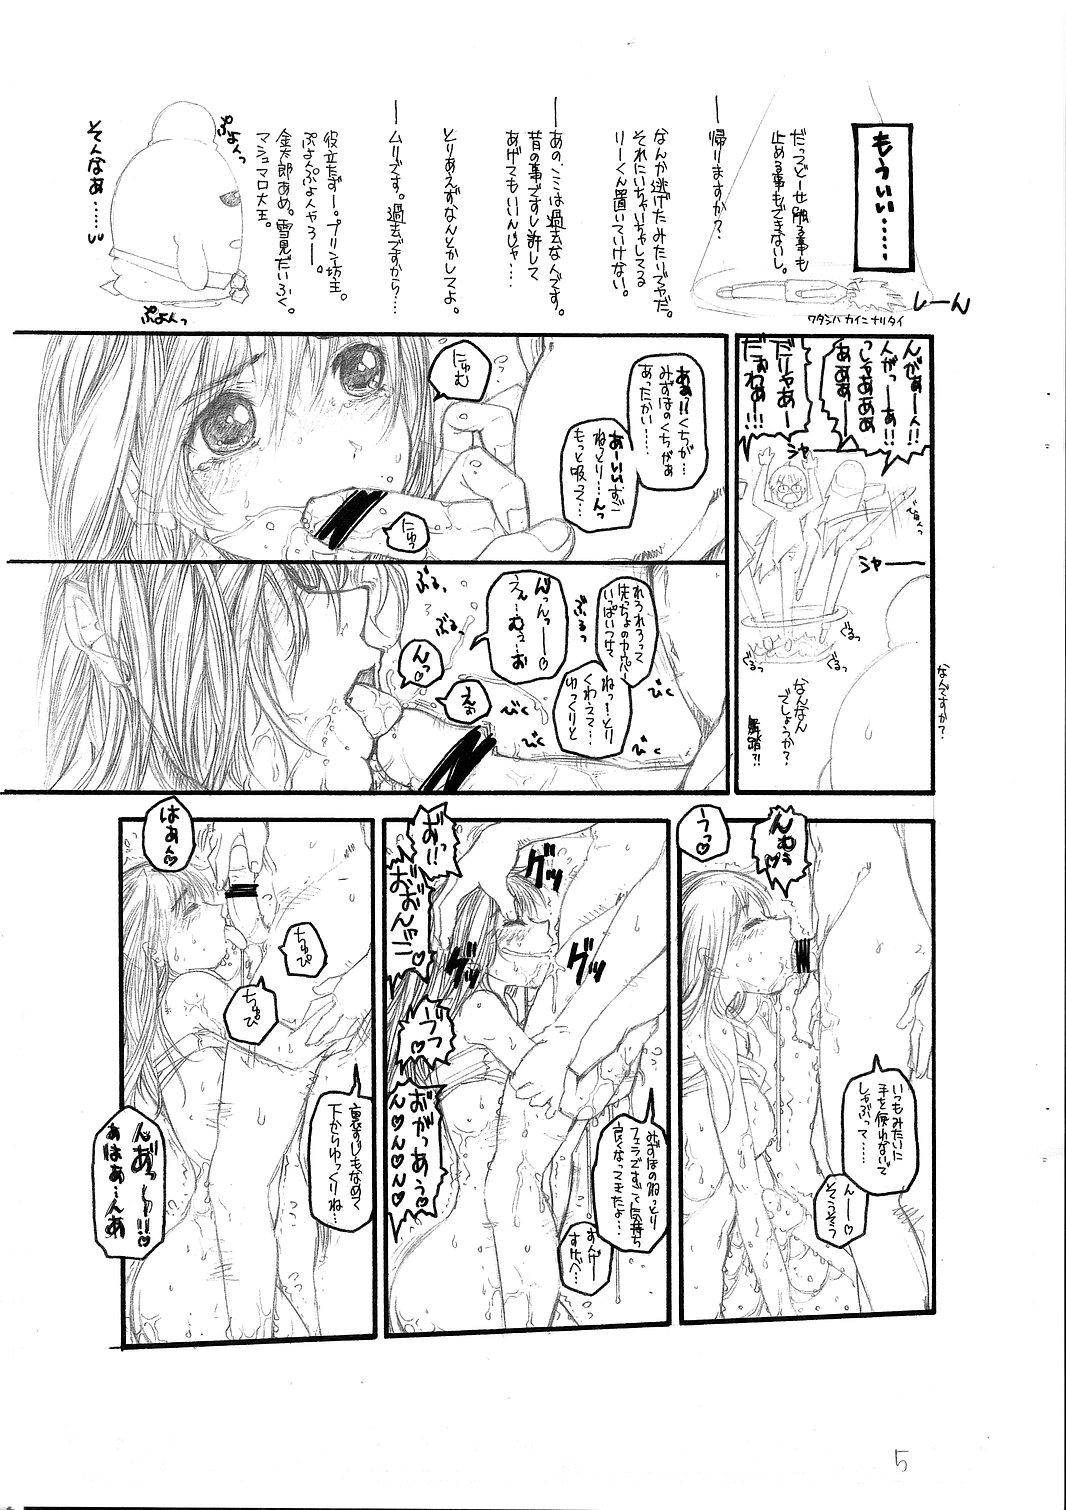 Playing Yamato Nadeshiko wo Omoikkiri Kegashitai! Picked Up - Page 7